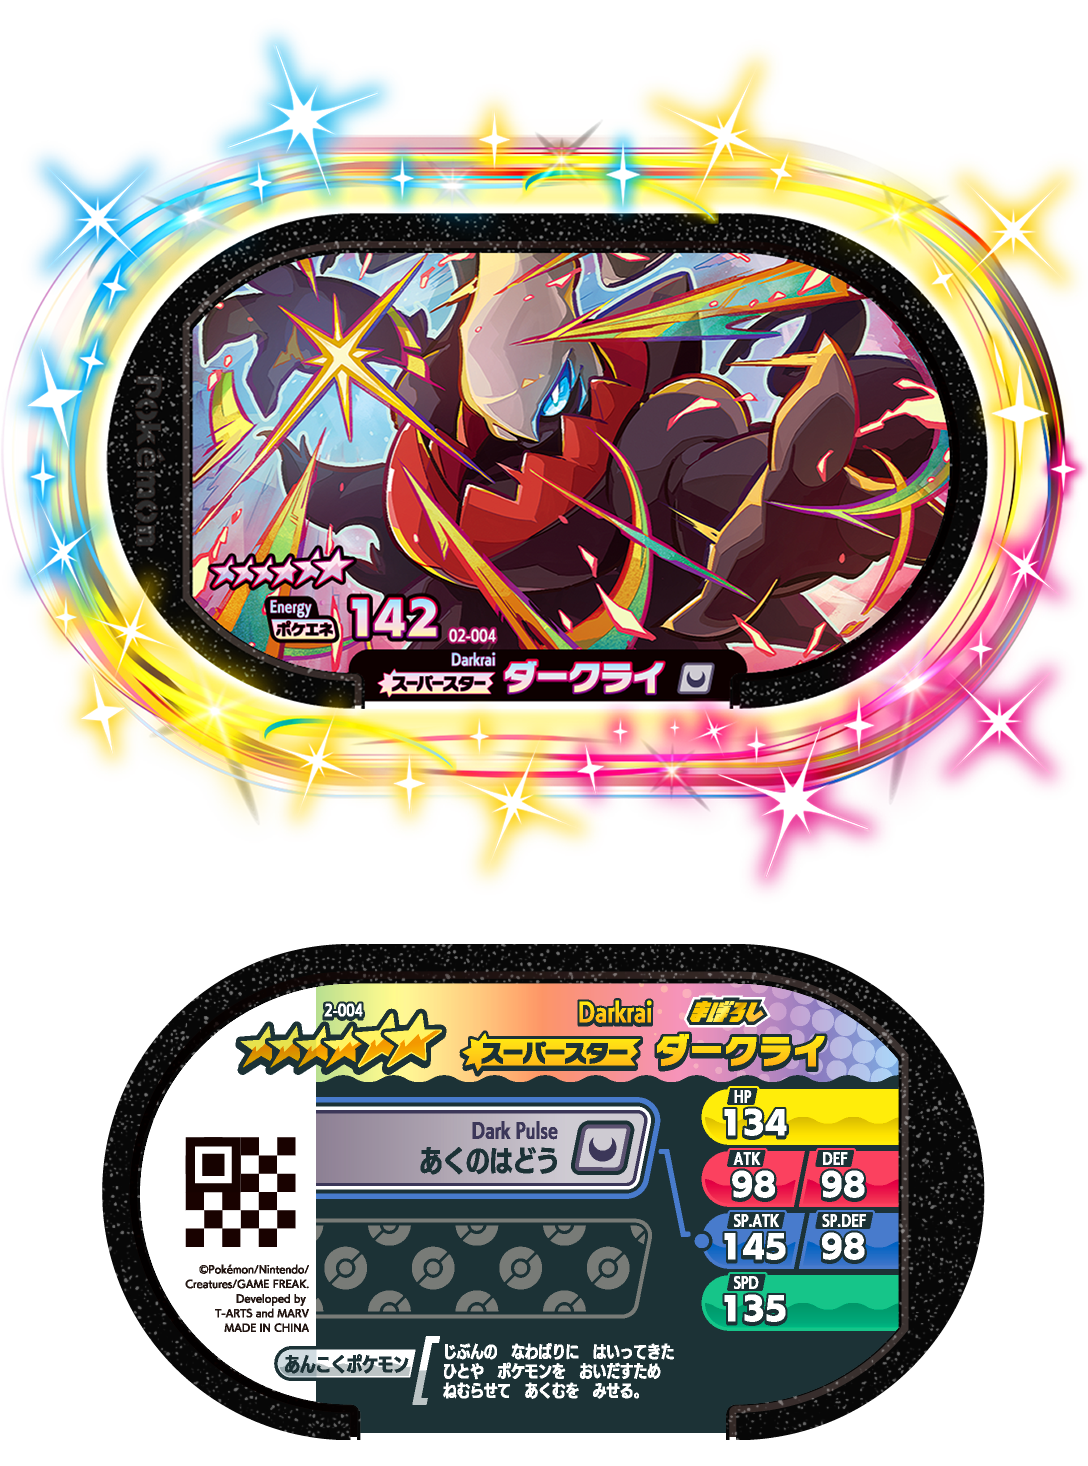 Pokémon MEZASTAR 02-004 Super Star Pokémon tag  Darkrai